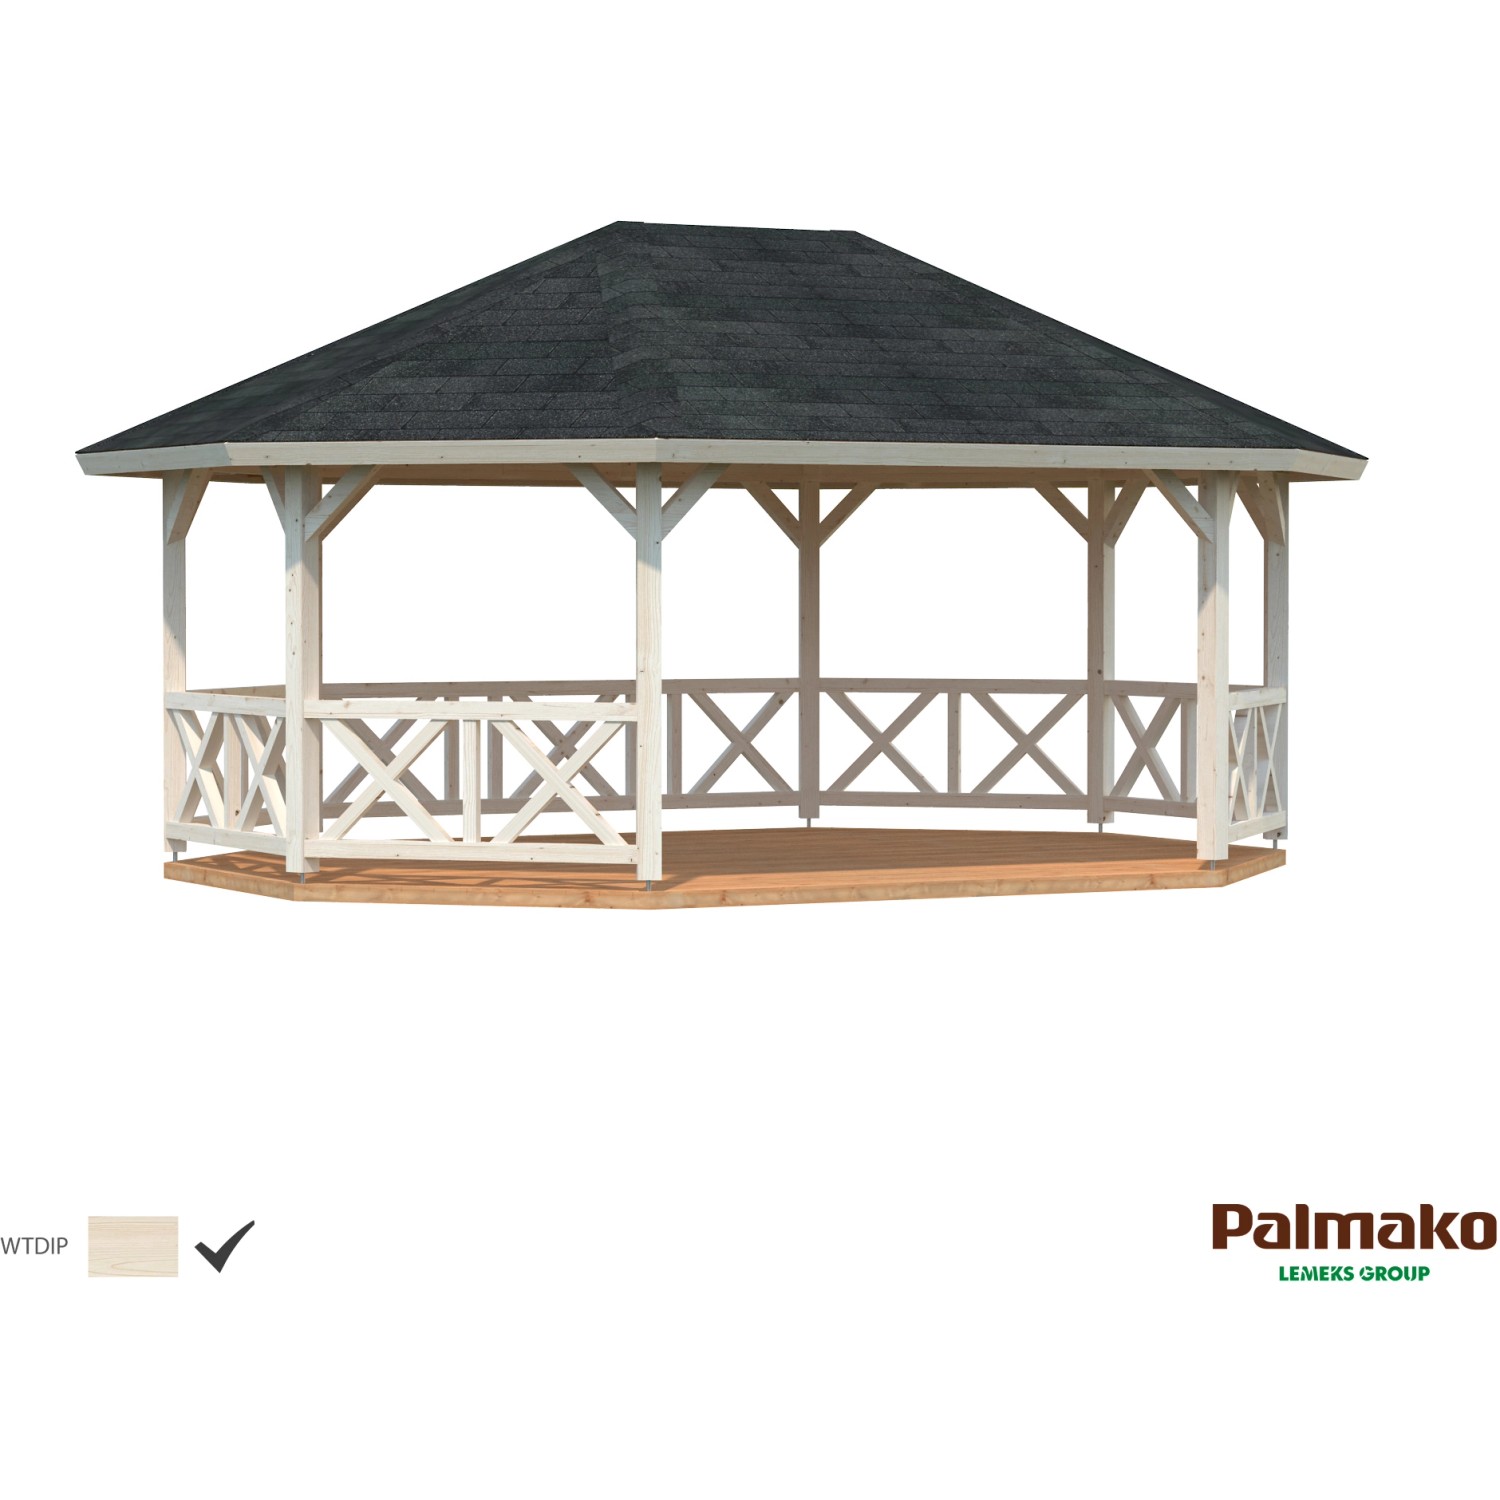 Palmako Holz-Pavillon Betty klar tauchgrundiert BxT: 615 cm x 465 cm von Palmako